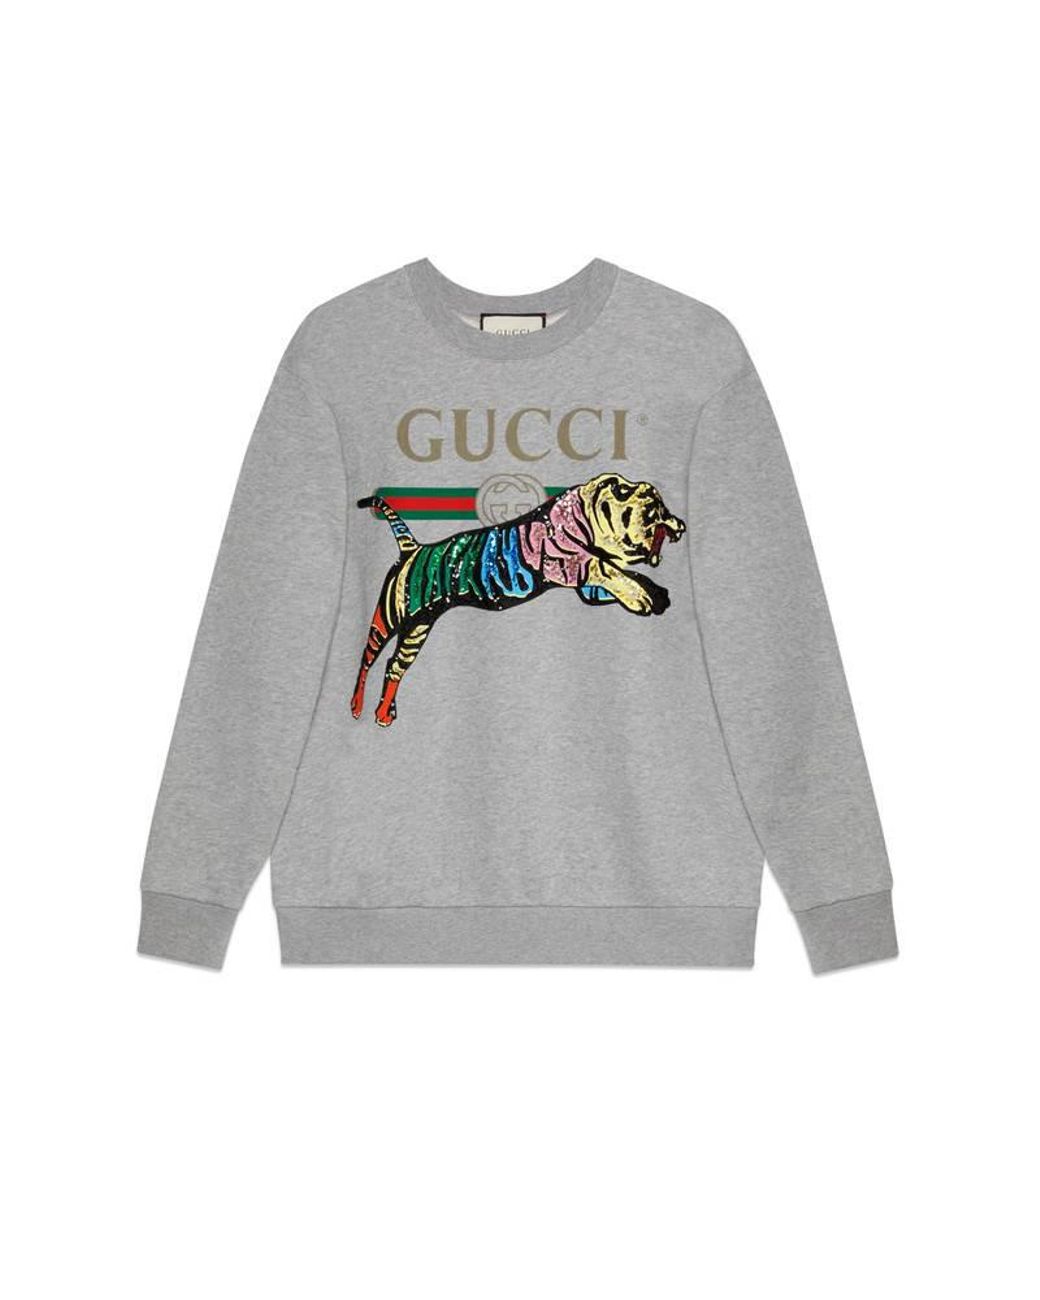 Gucci Sequin Tiger Sweatshirt in Gray | Lyst